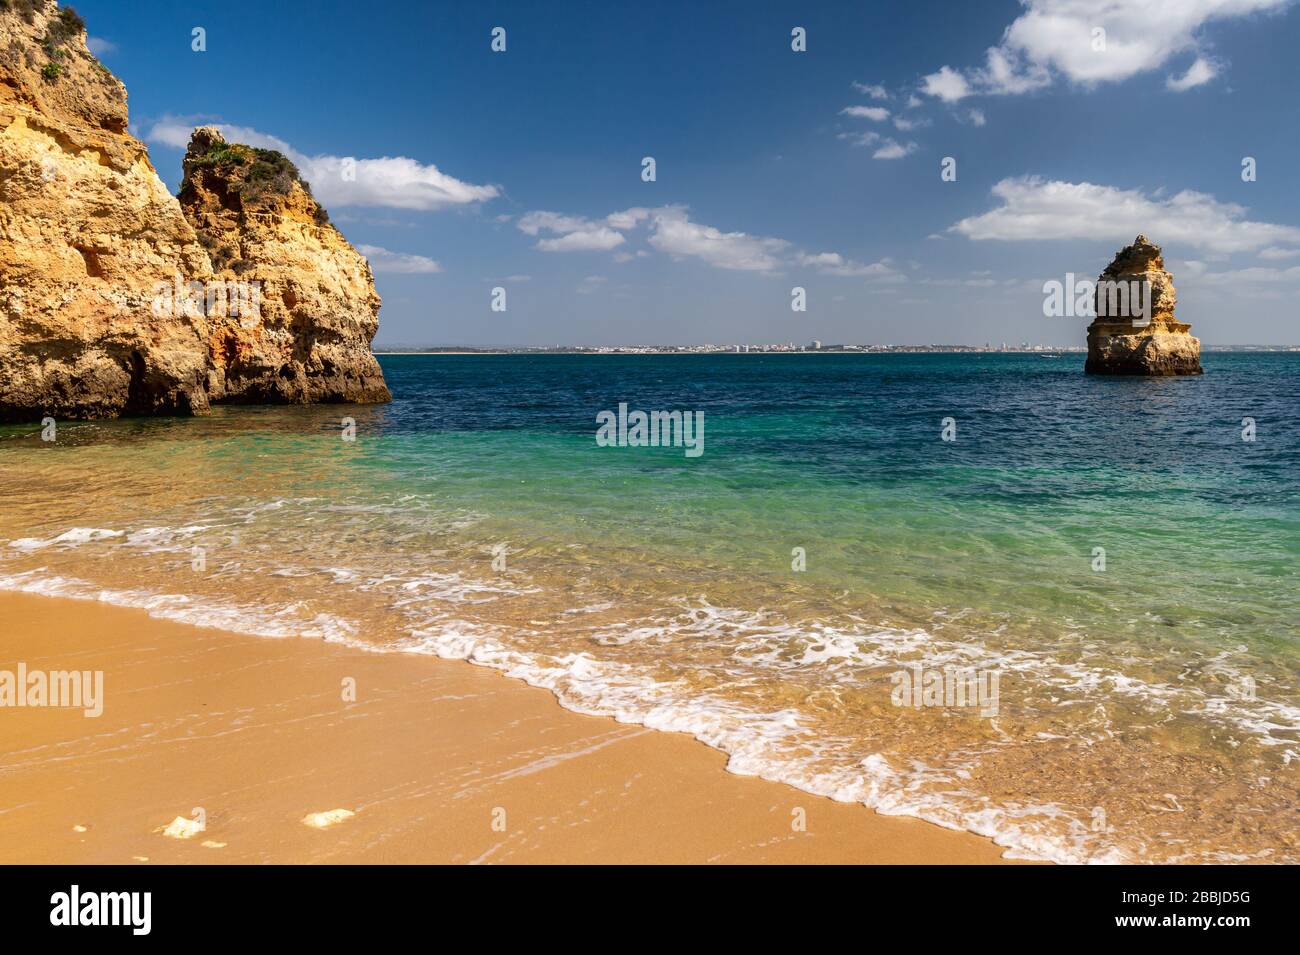 Atlantic ocean and cliffs at Praia do Camilo Beach, Lagos, Portugal Stock Photo